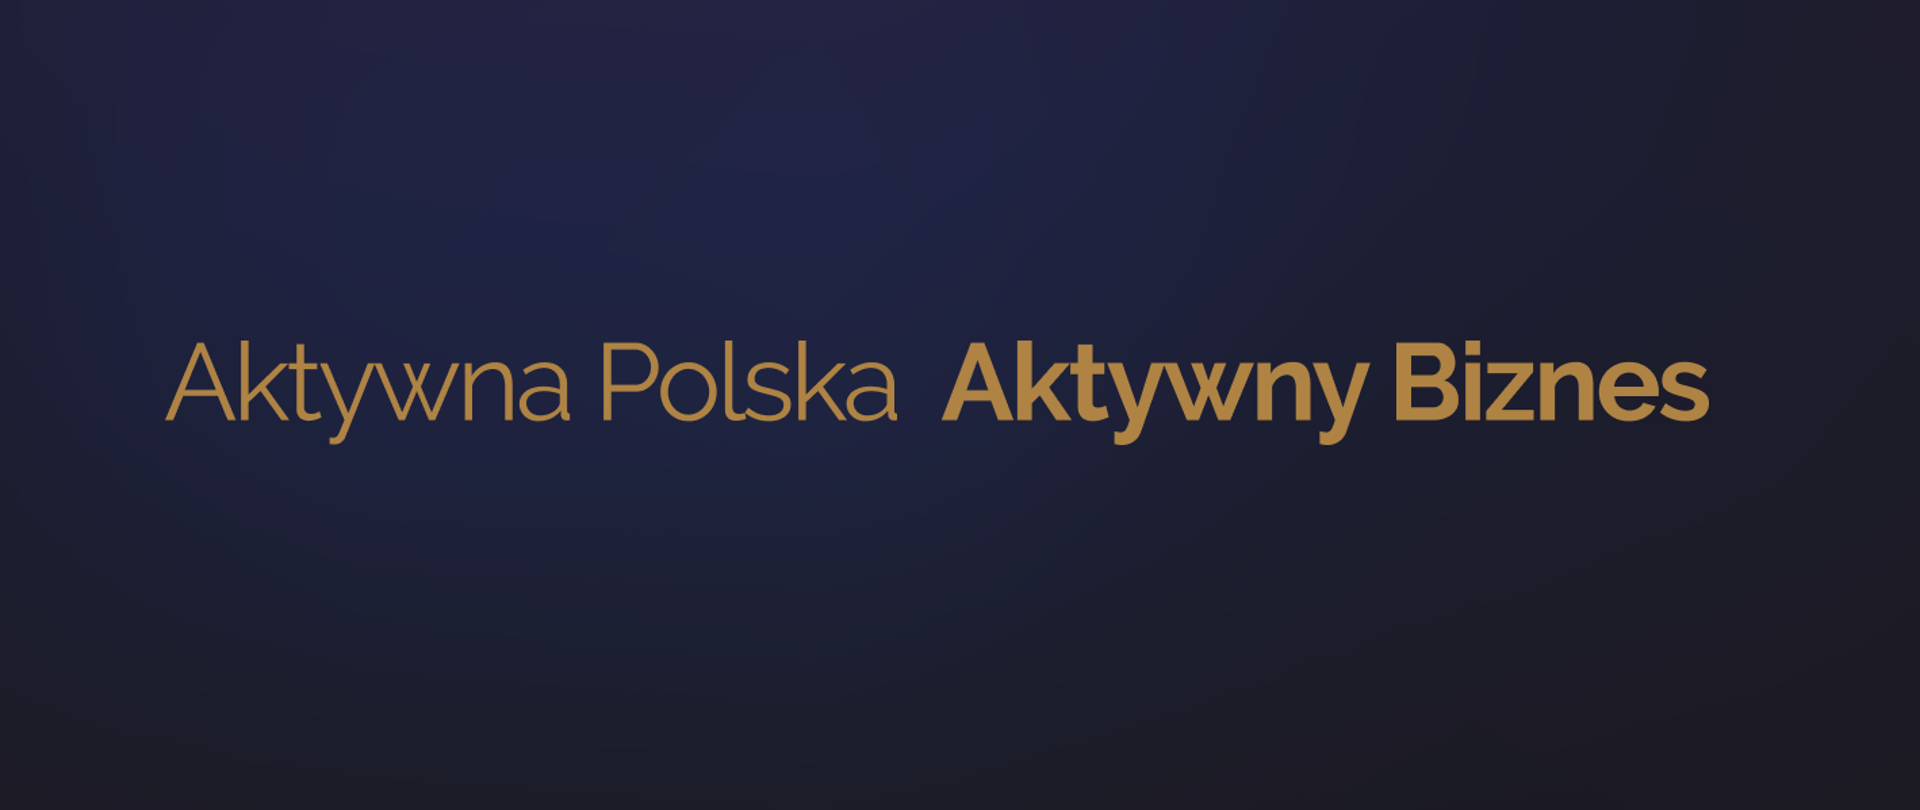 Aktywna Polska Aktywny Biznes 